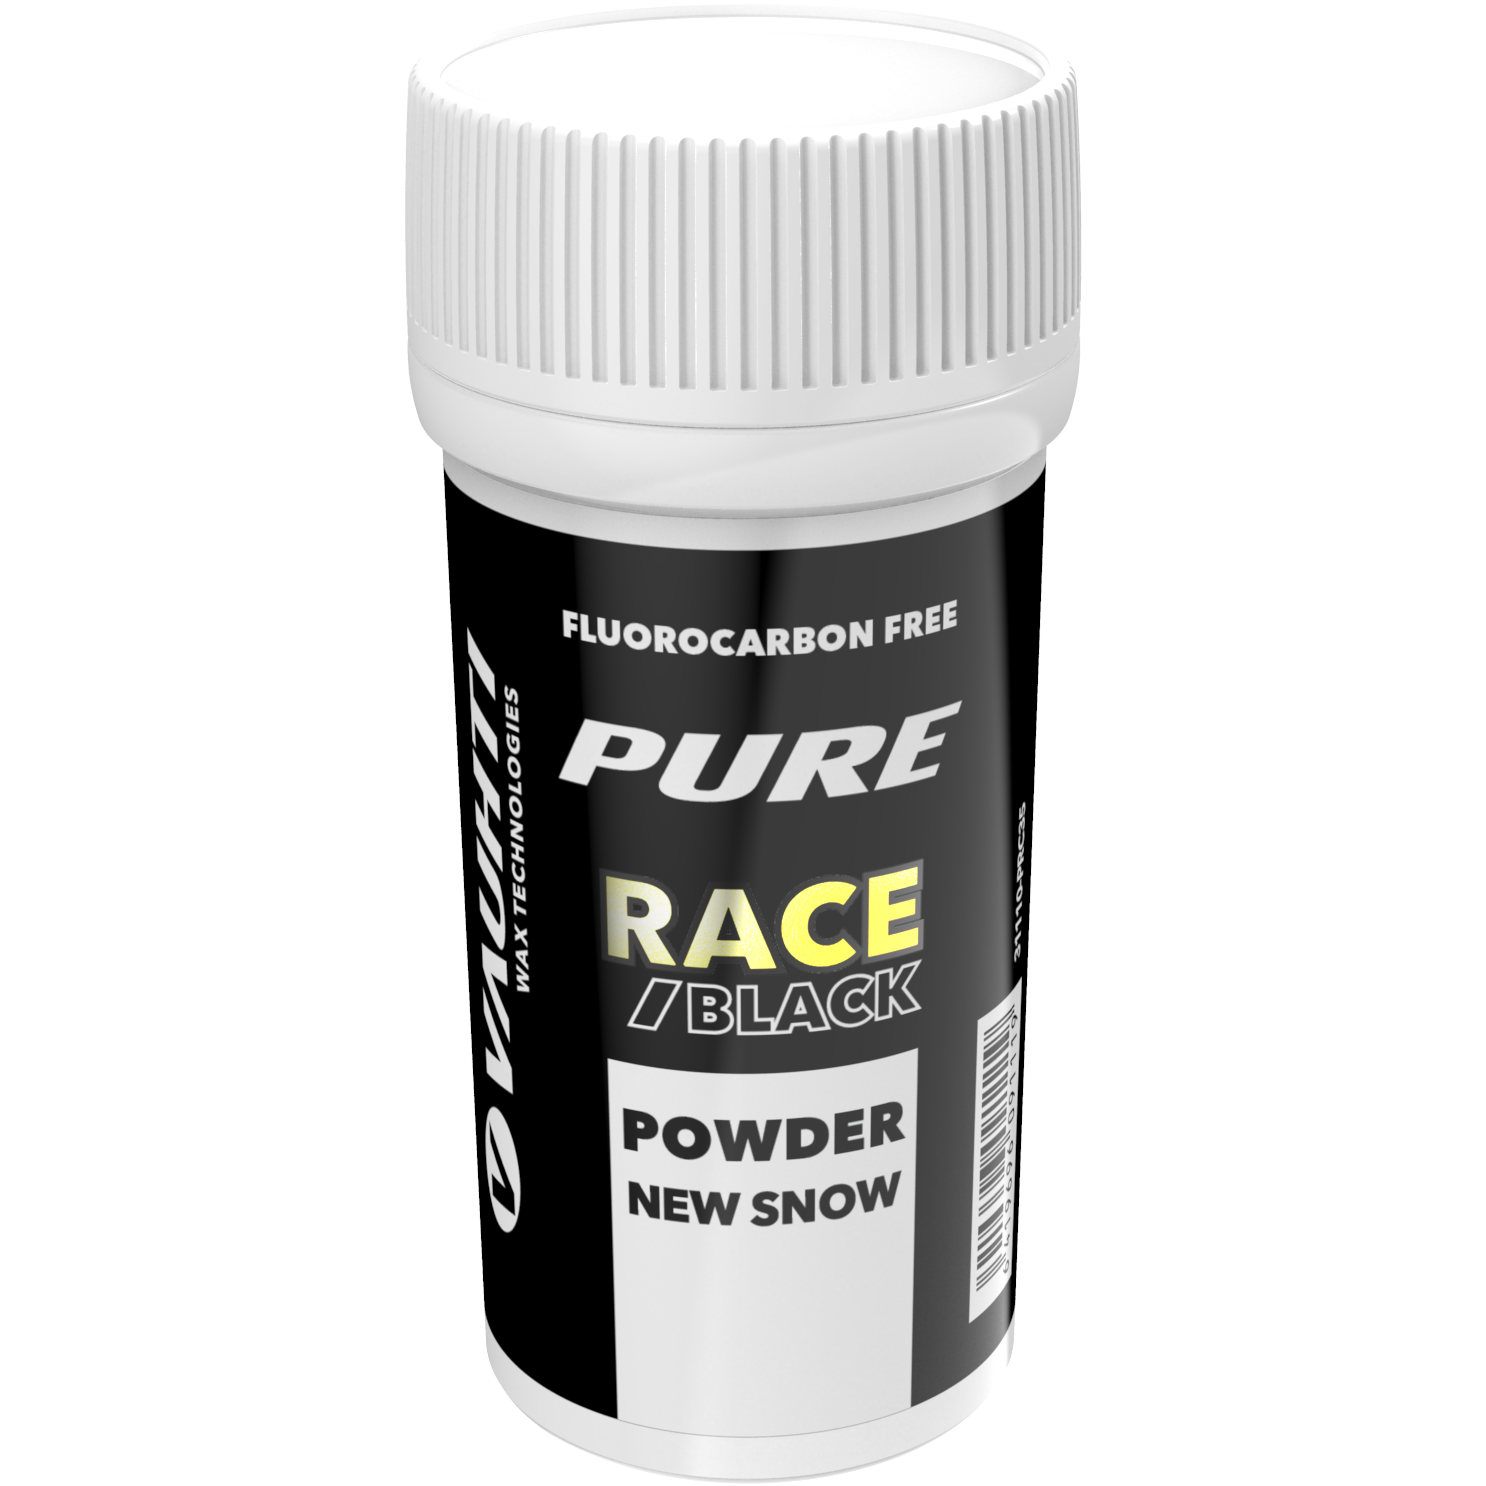 Vauhti Pure Race New Snow Black Powder 35g